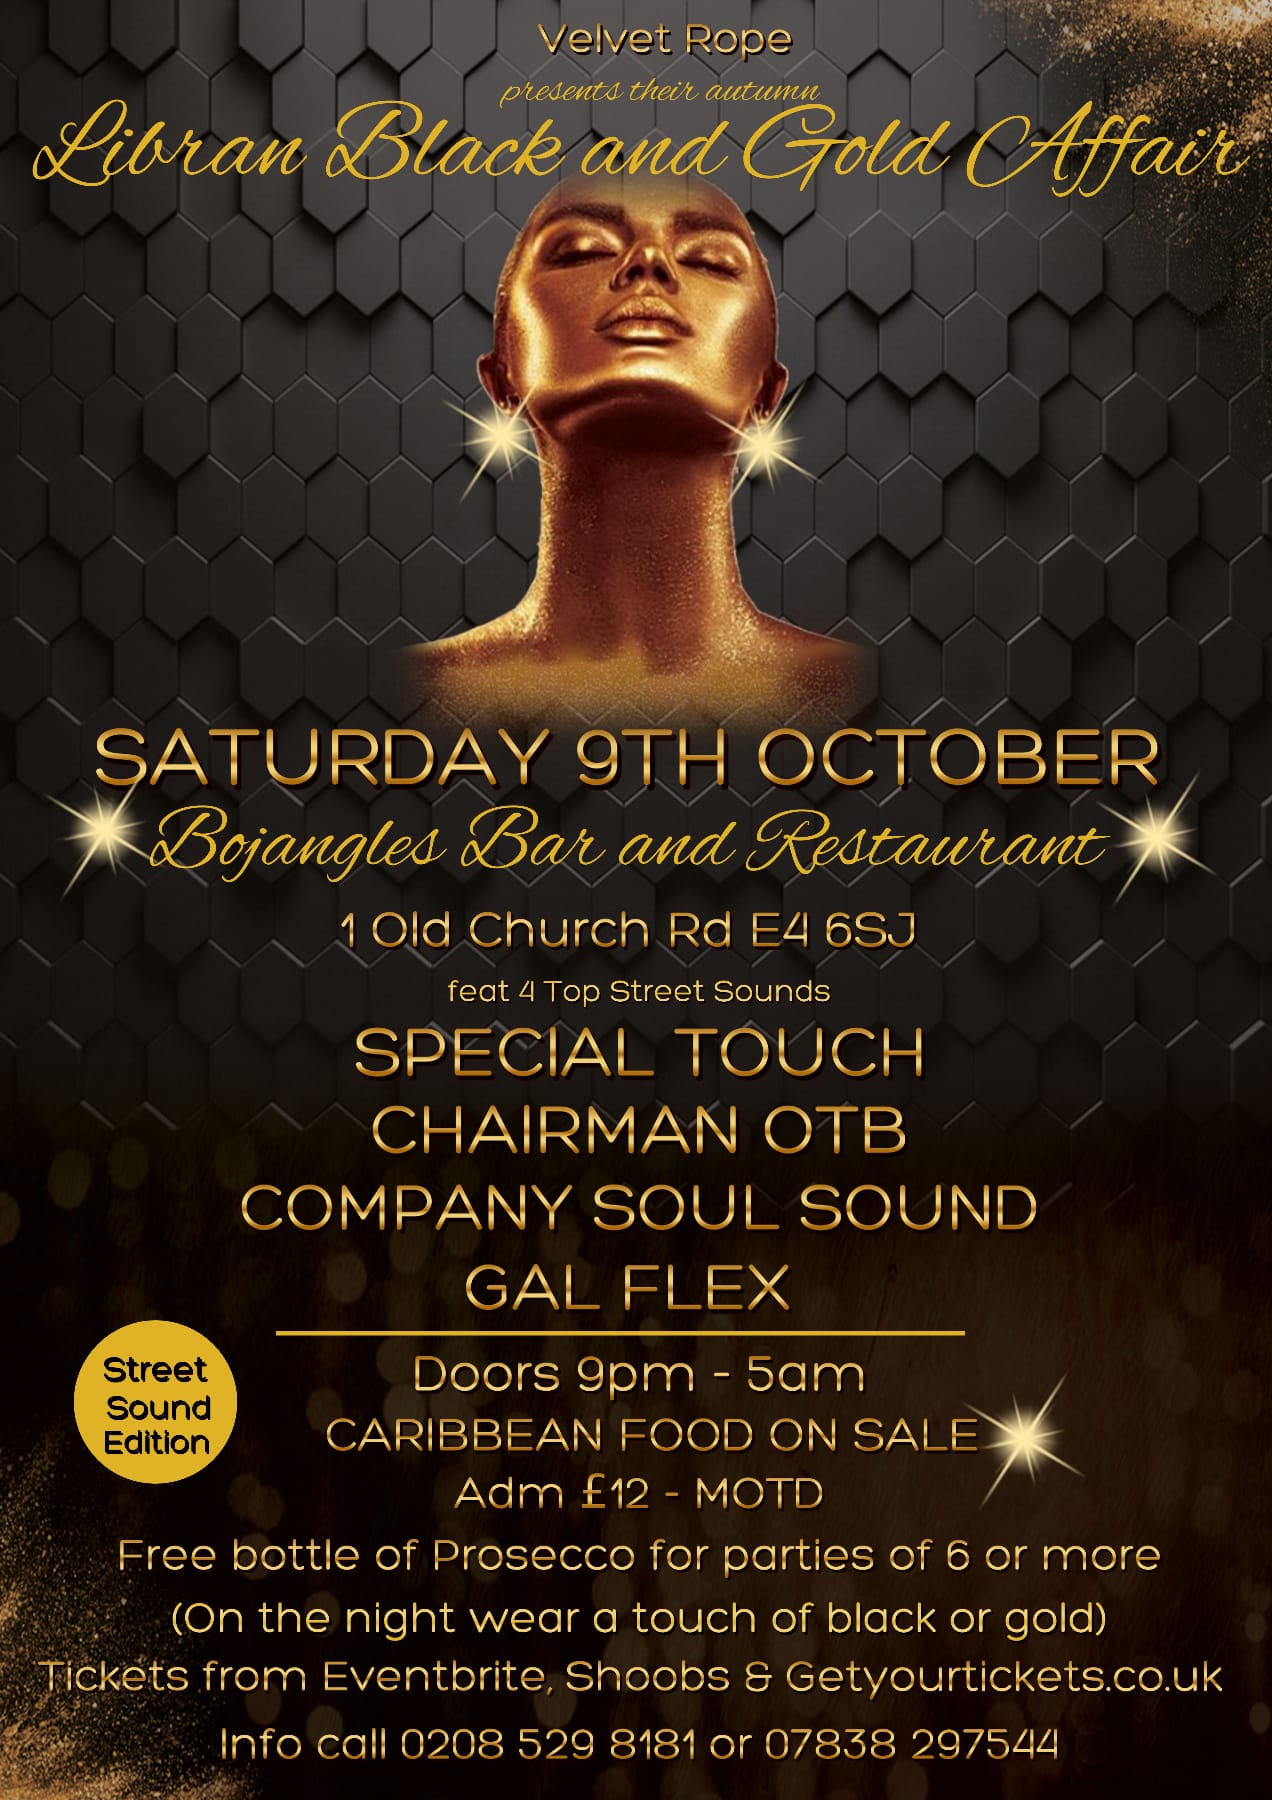 Libran Black and Gold Affair - Club Night in Chingford, Chingford, London, United Kingdom